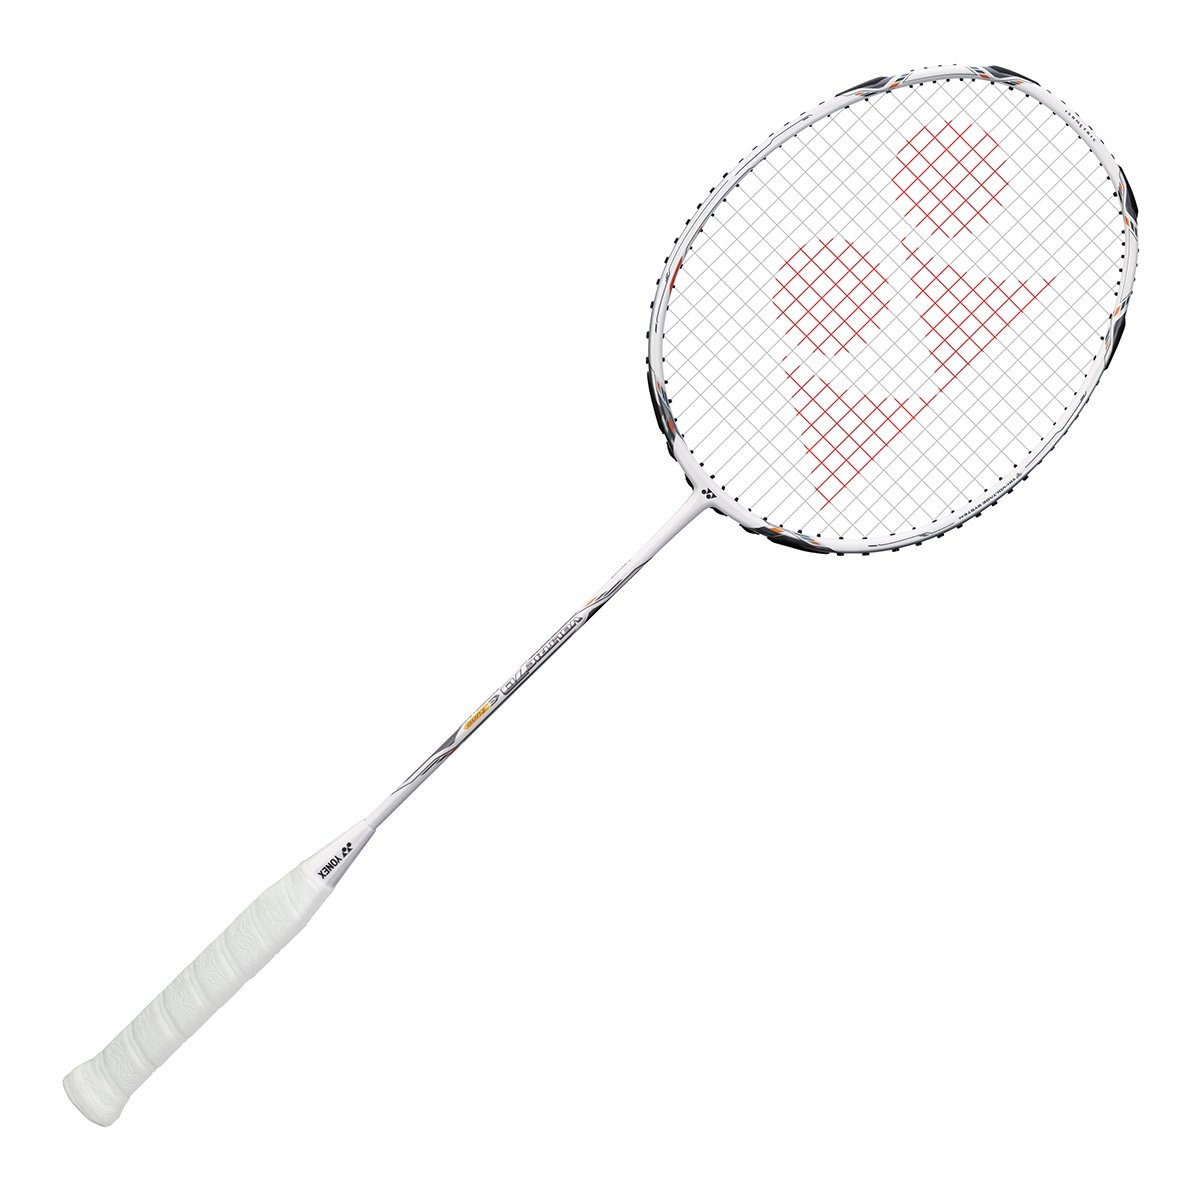 Yonex Voltric 70 E-tune badminton racket